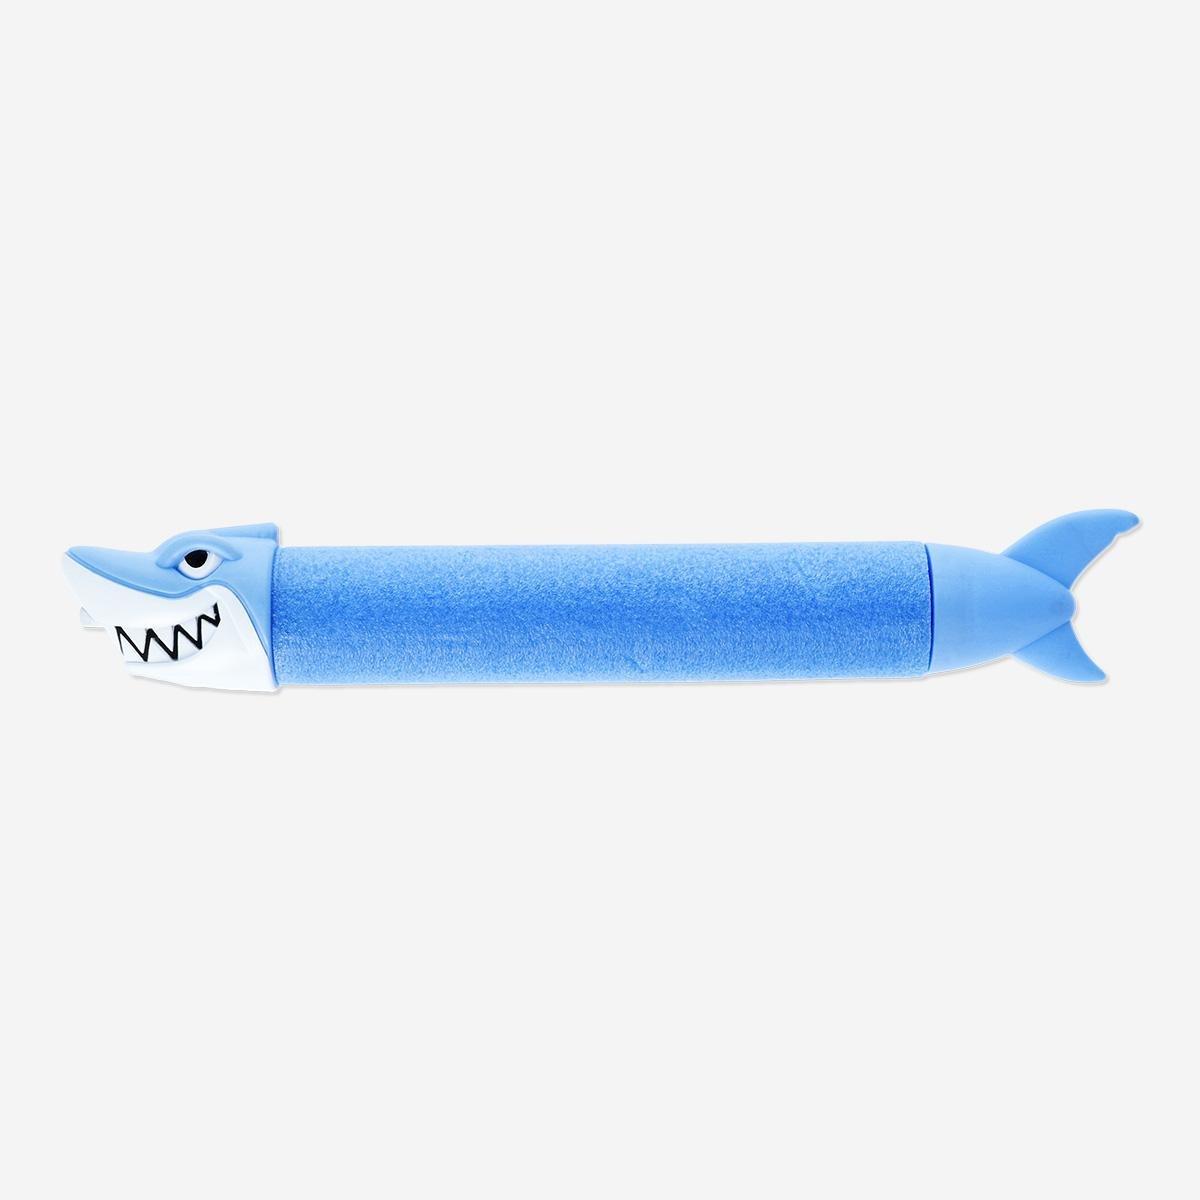 Blue water pump toy